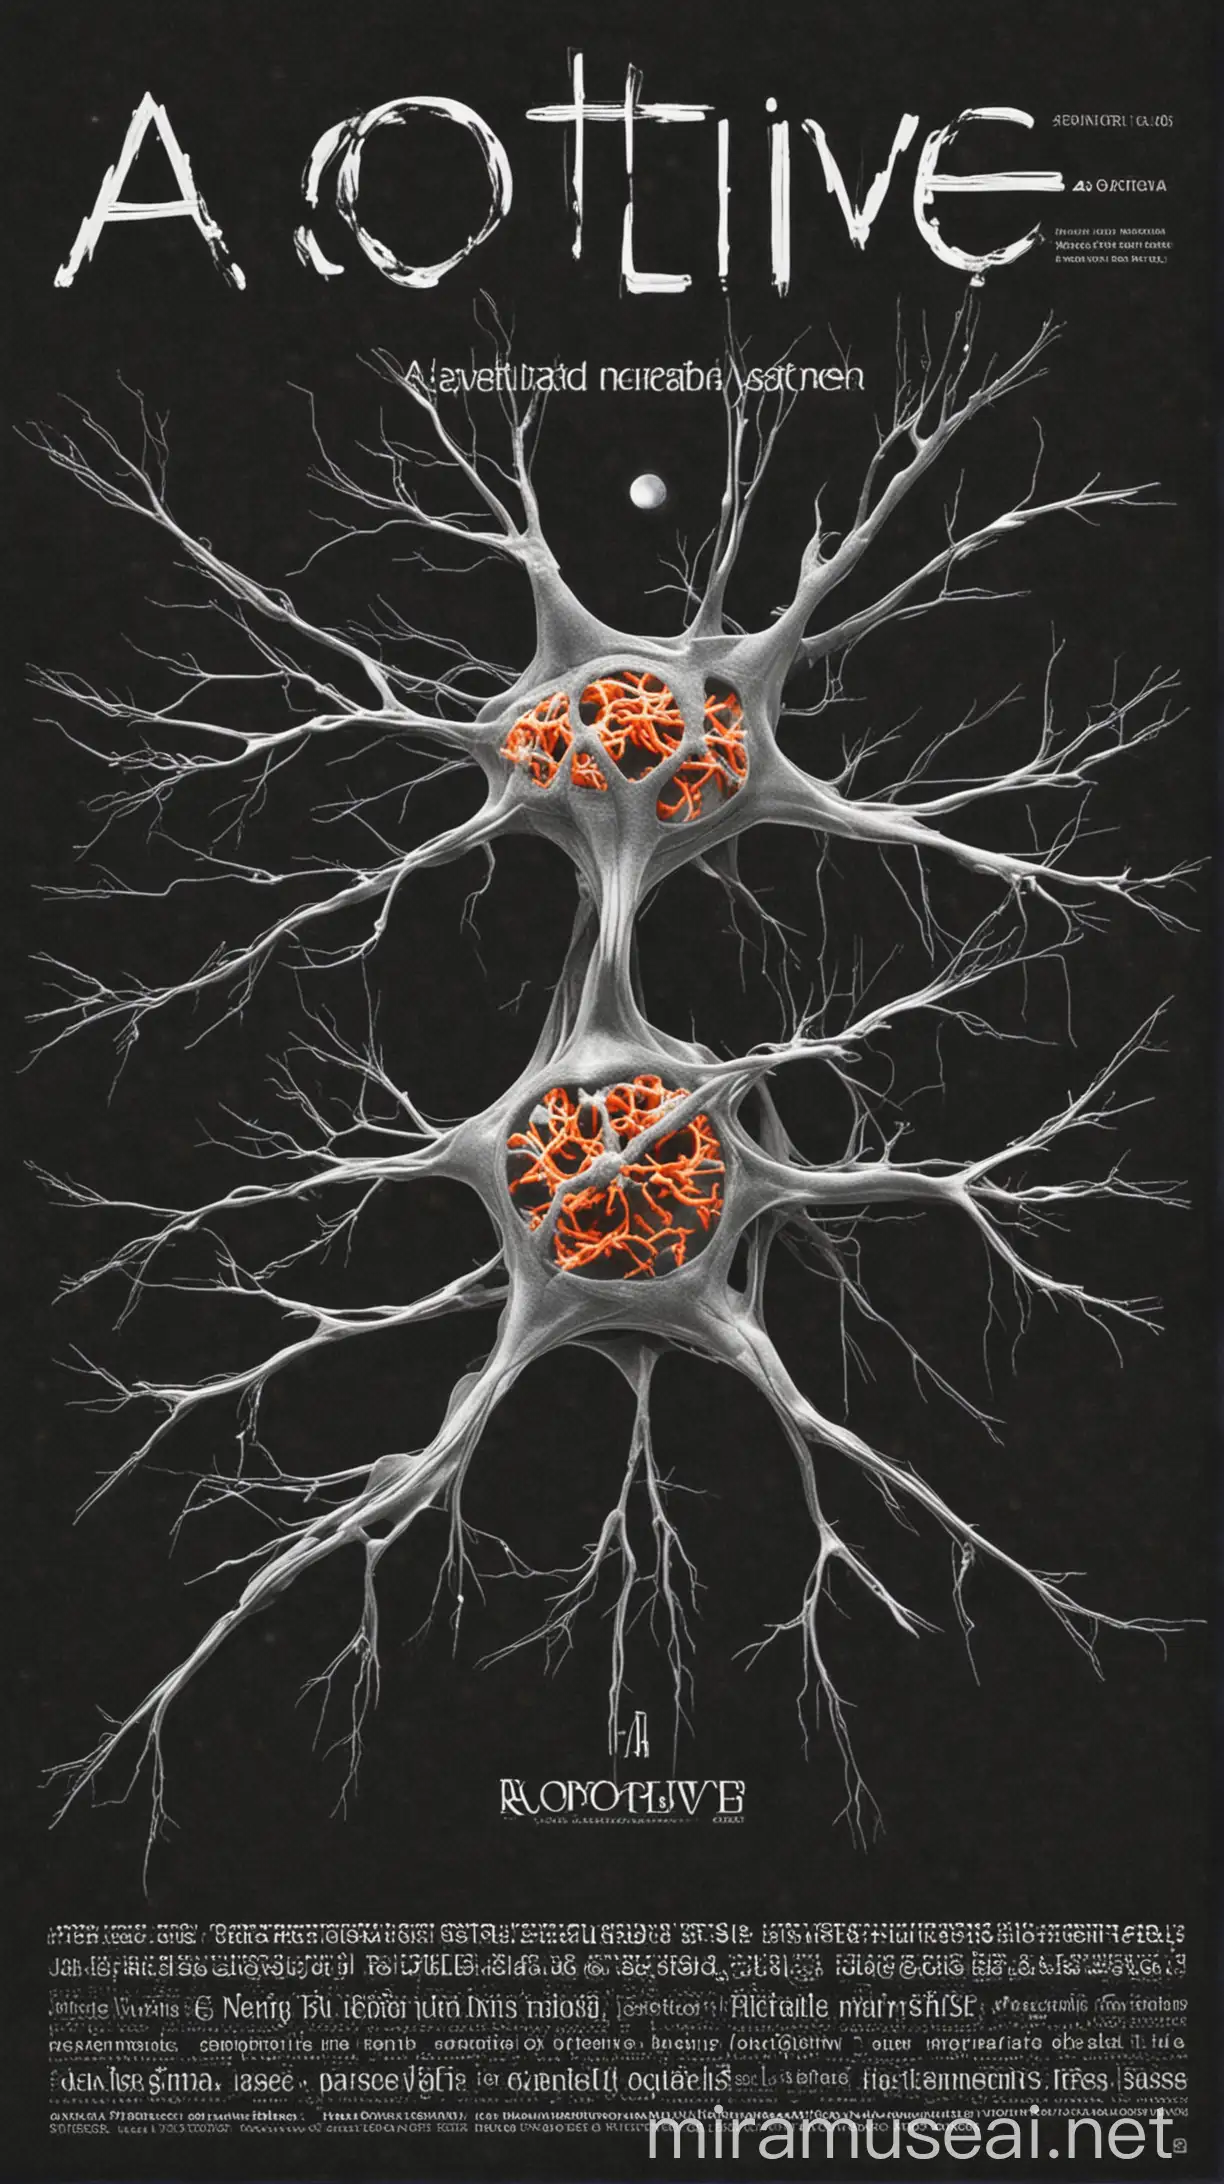 Neuro atoms connected in scientific magazine Active